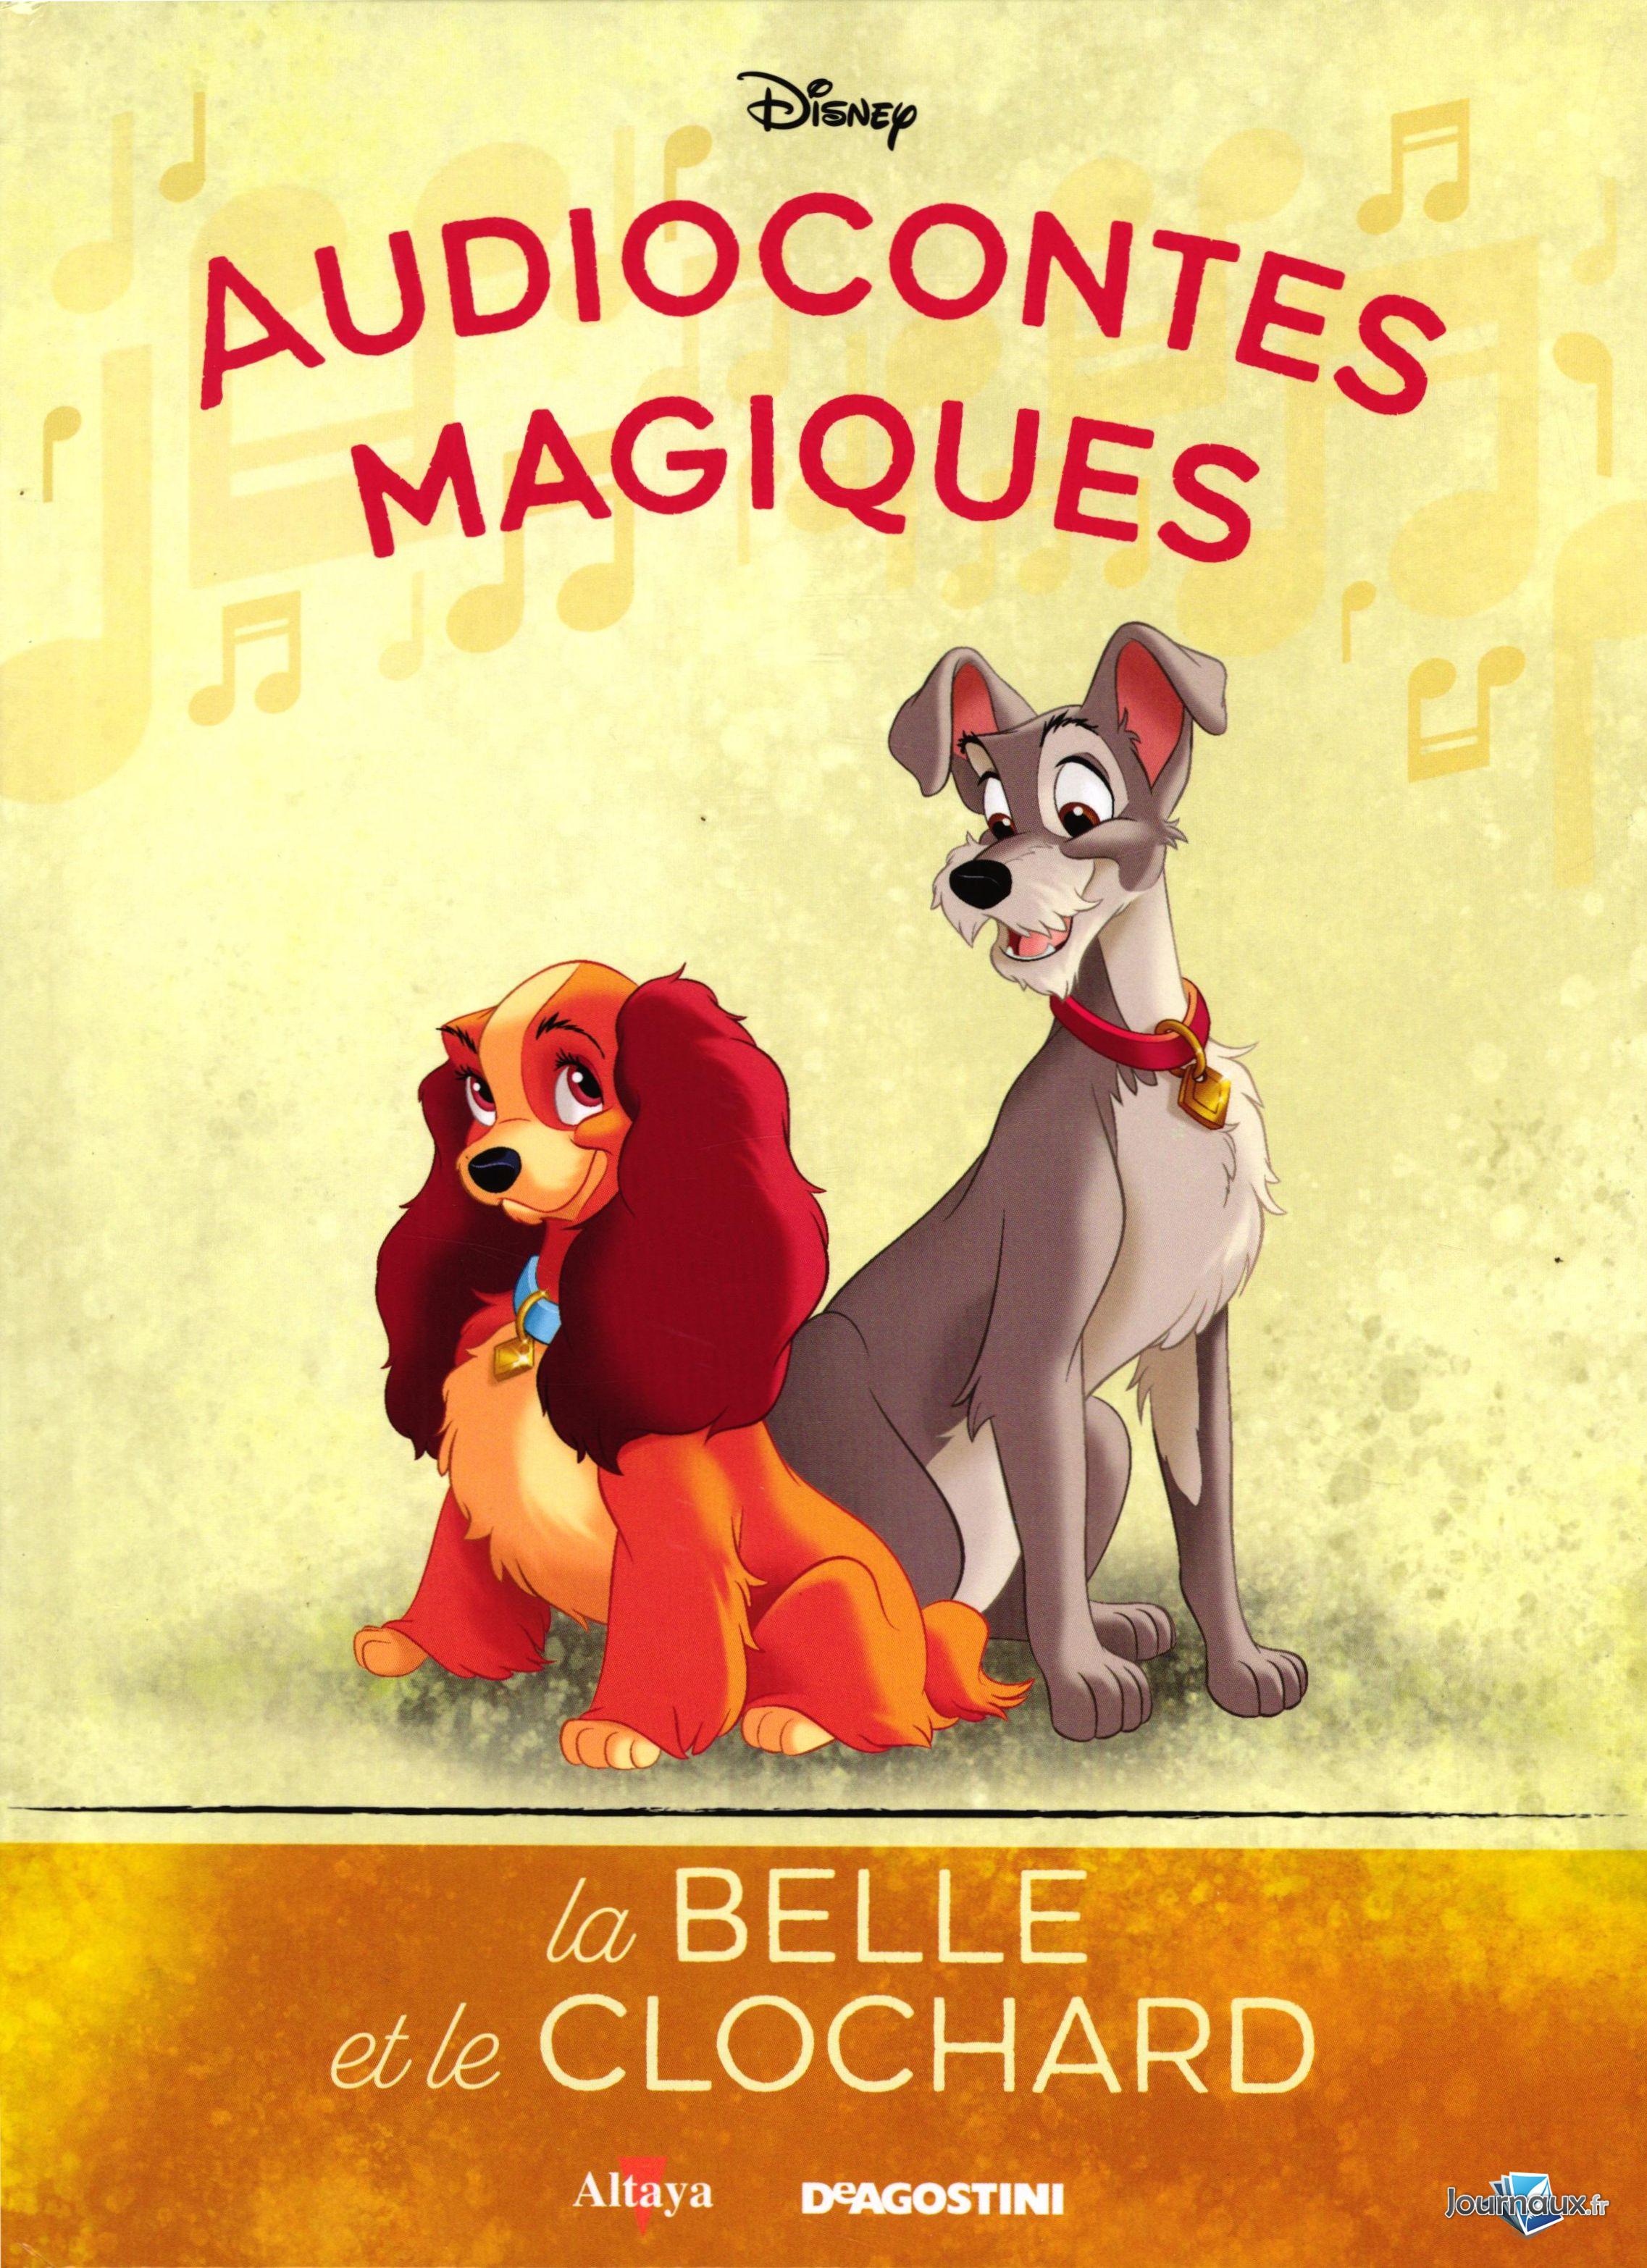 La collection des AudioContes Magiques Disney